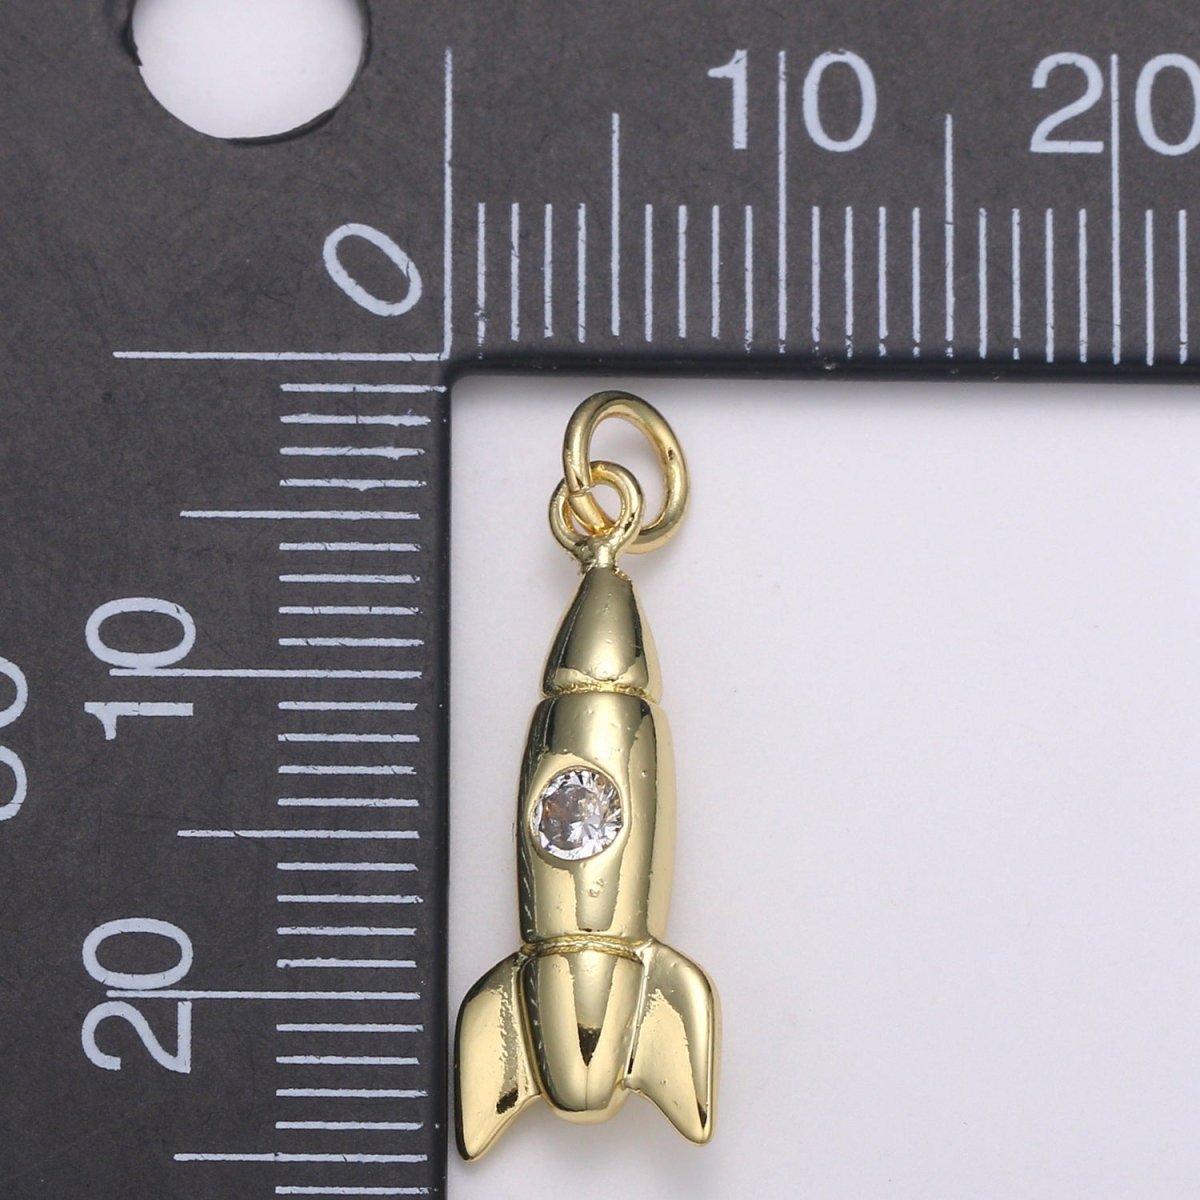 14K Gold Filled Rocket Charm Cute Rocket Ship Charm Pendant for Necklace Bracelet Earring Component Supply D-774 - DLUXCA